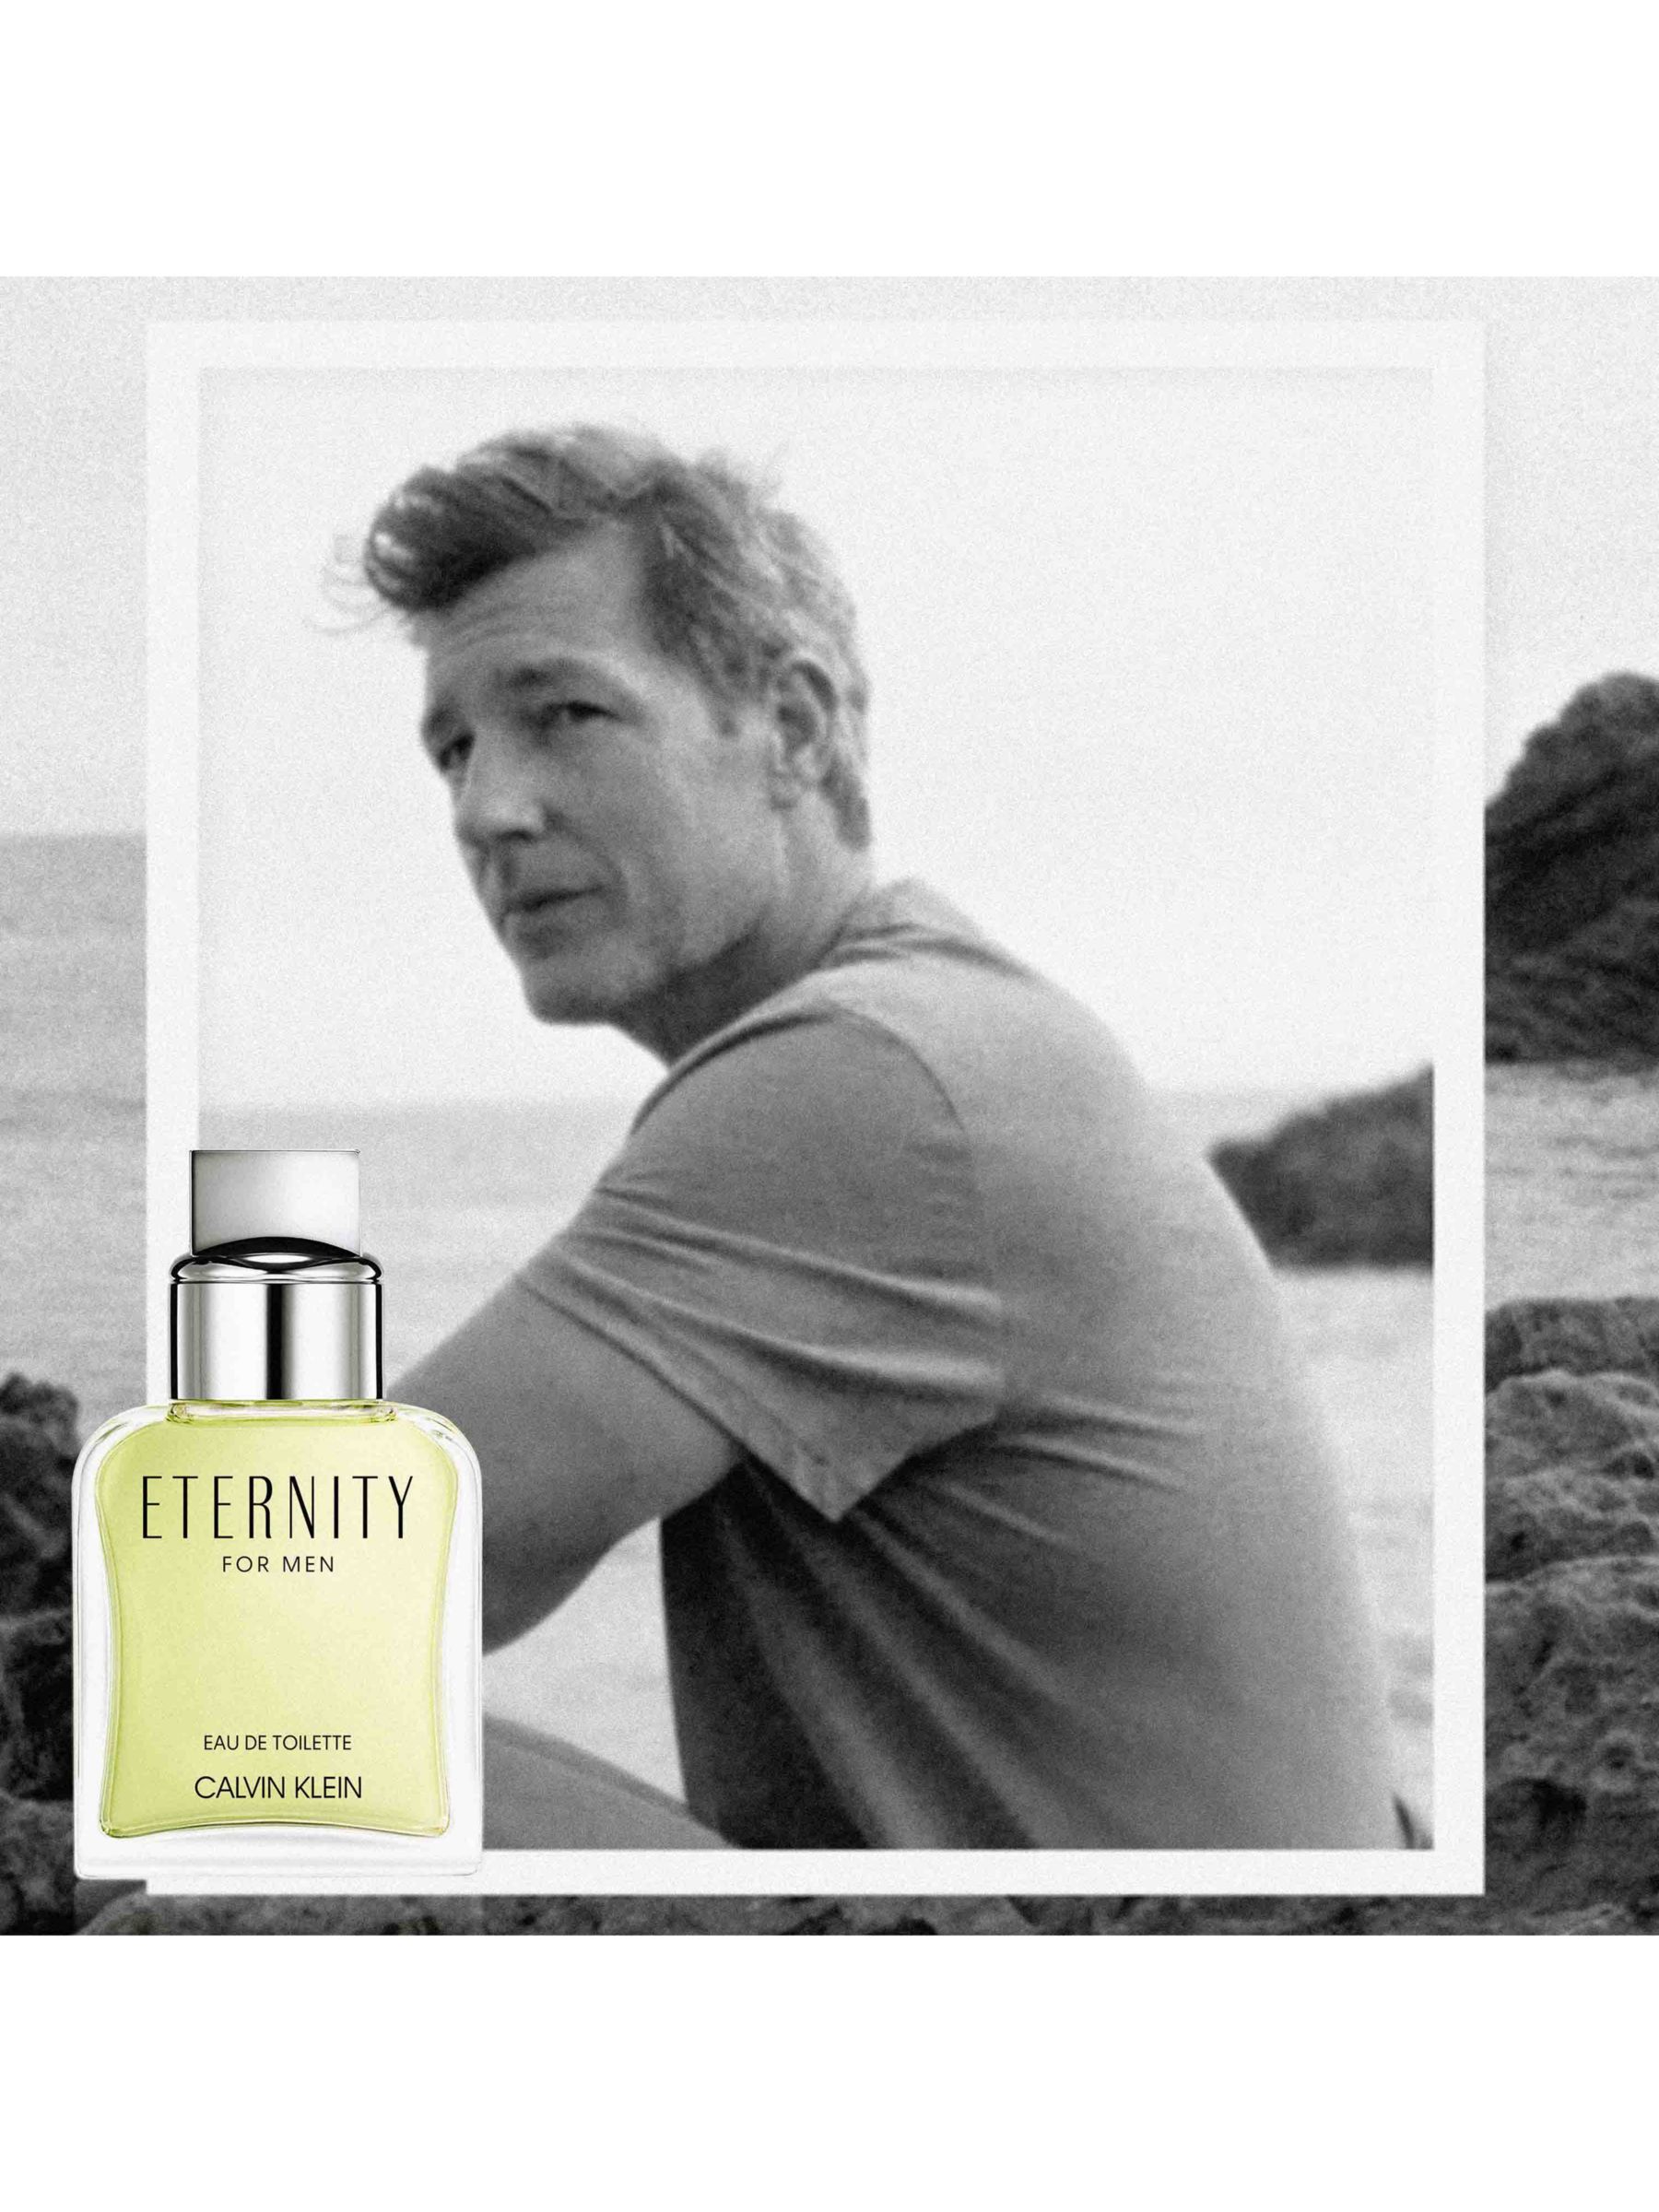 Calvin Klein Eternity for Men, Eau de Toilette Spray, 50ml 6